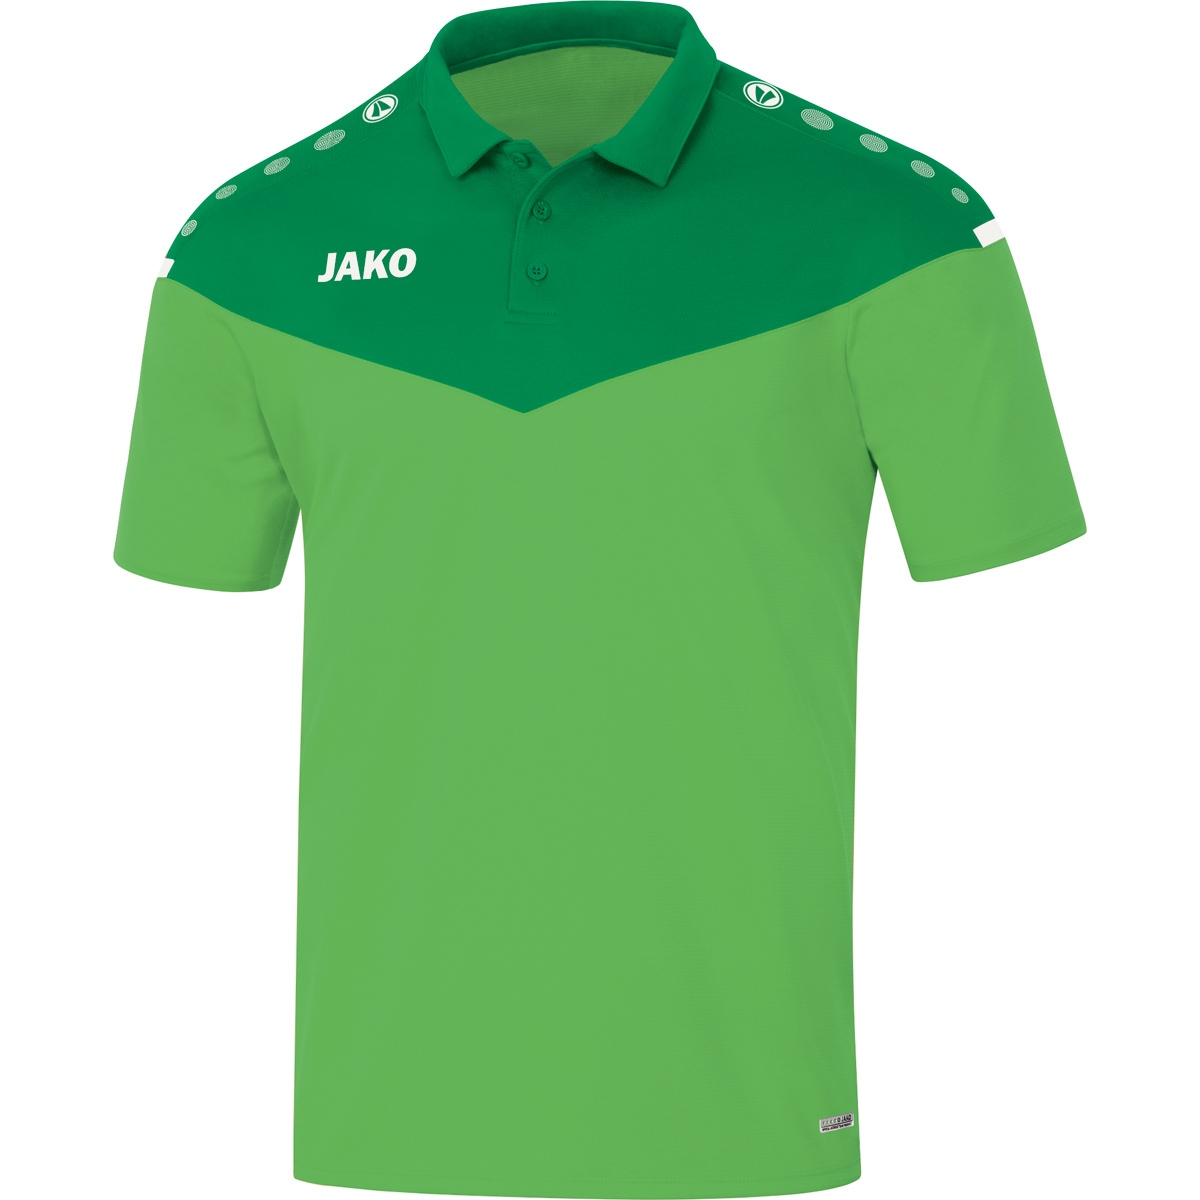 JAKO Polo Champ 2.0 6320 XL, Herren, soft Gr. green/sportgrün